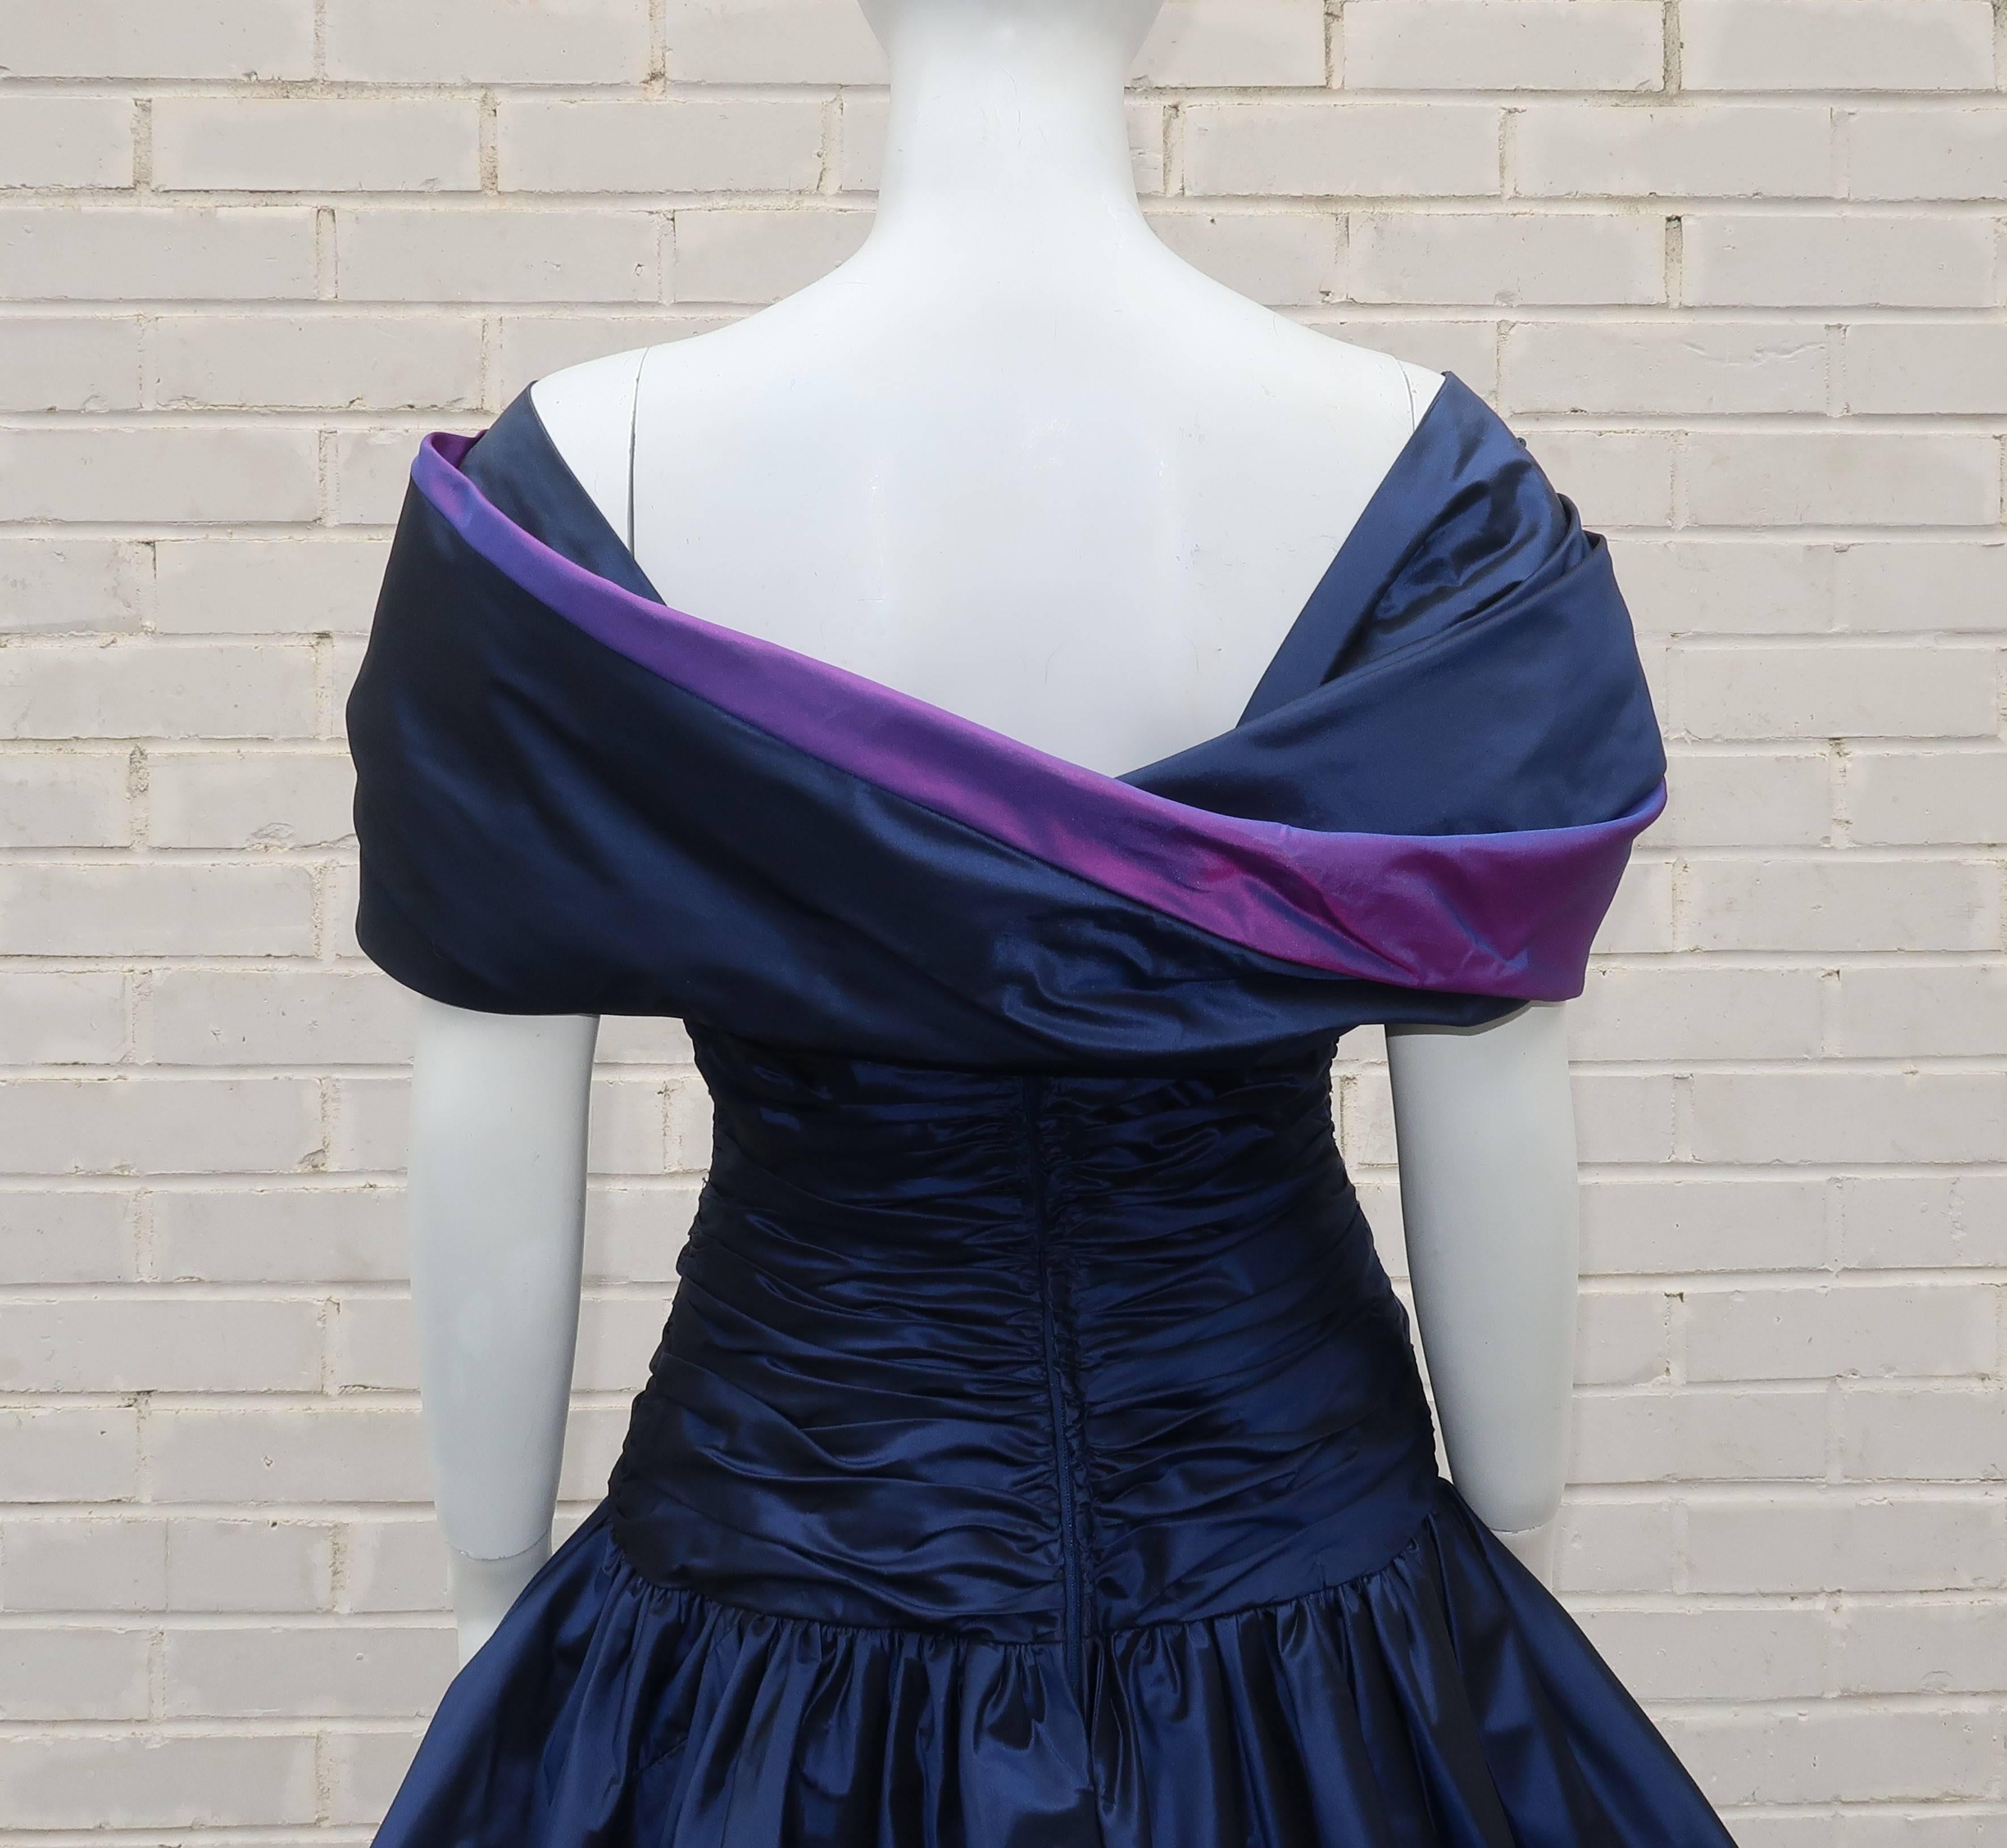 Mignon Blue Taffeta Dress With Dramatic Shoulder Drape, 1980s  2